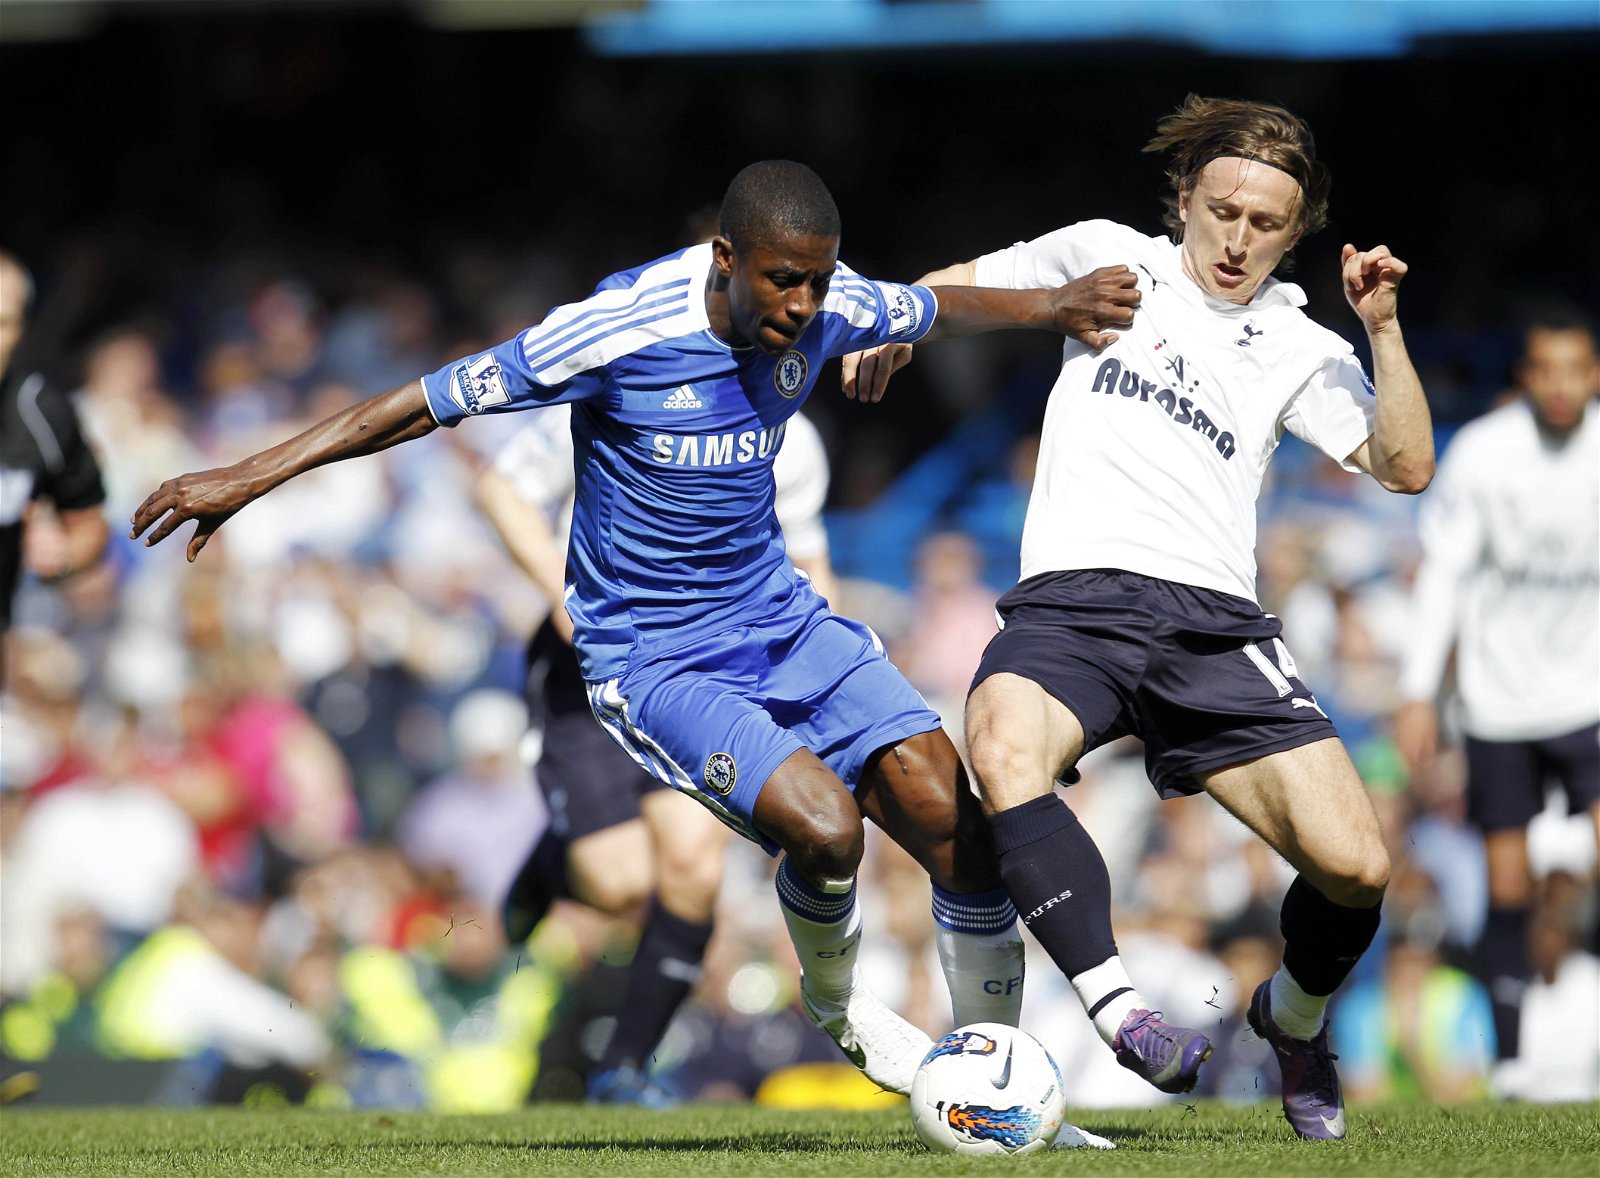 Balon d'Or winner Luka Modric broke down when Chelsea move failed